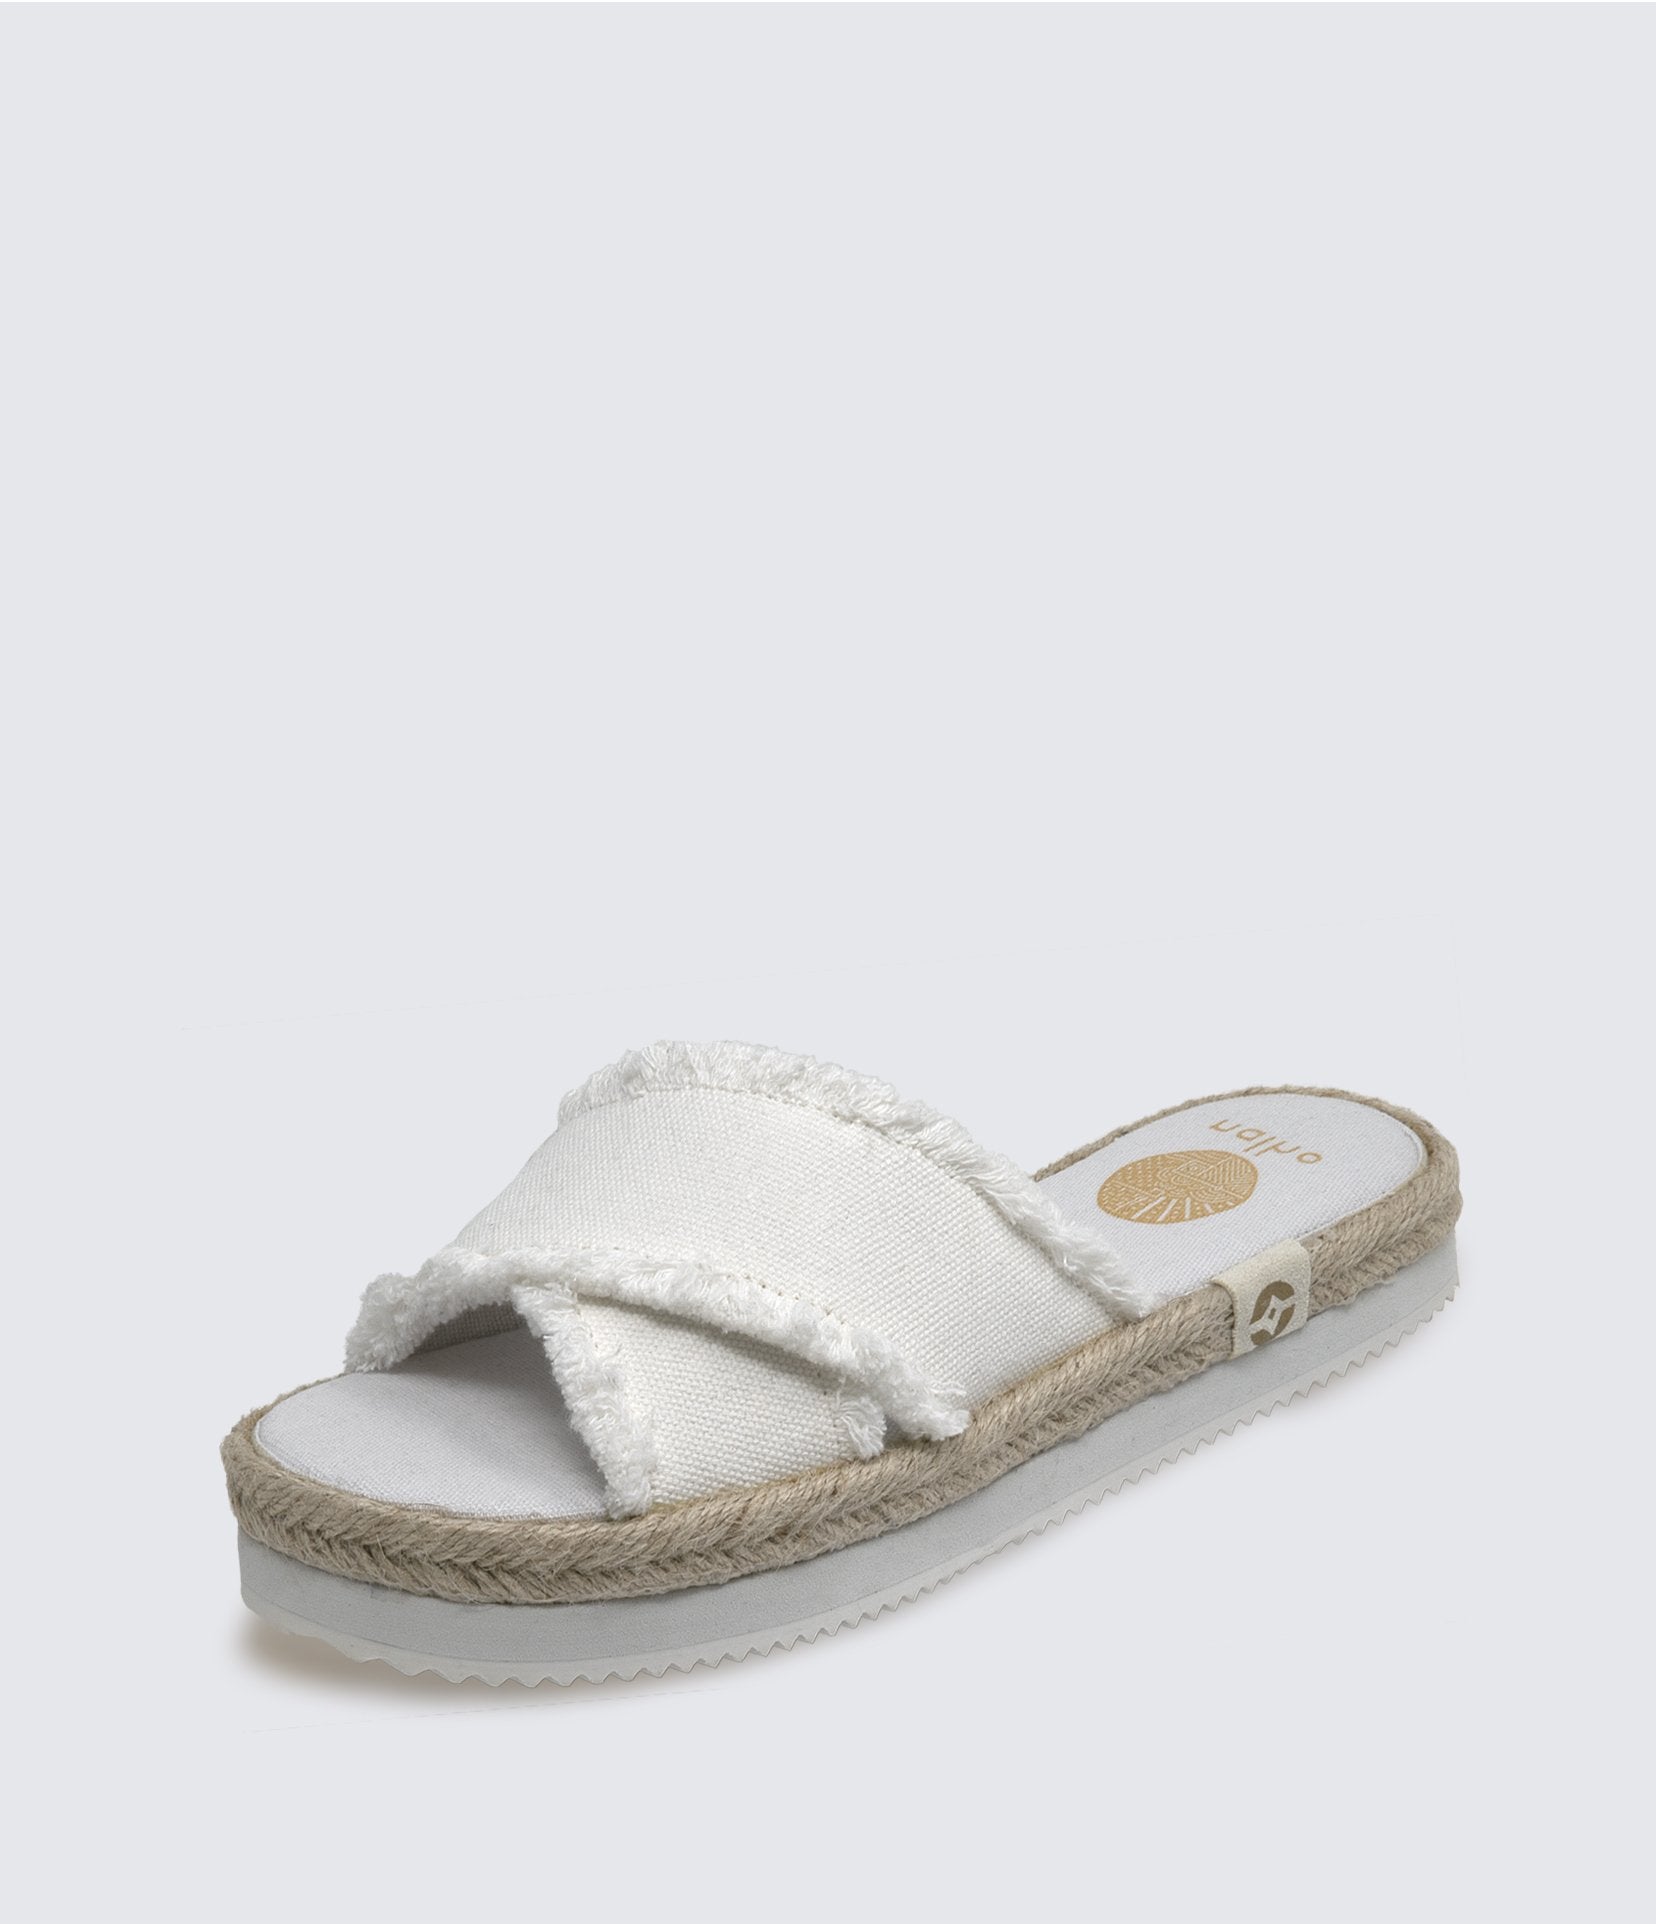 Nalho Platform Sandals Espadrilles - Yoga Mat Comfortable Sole White